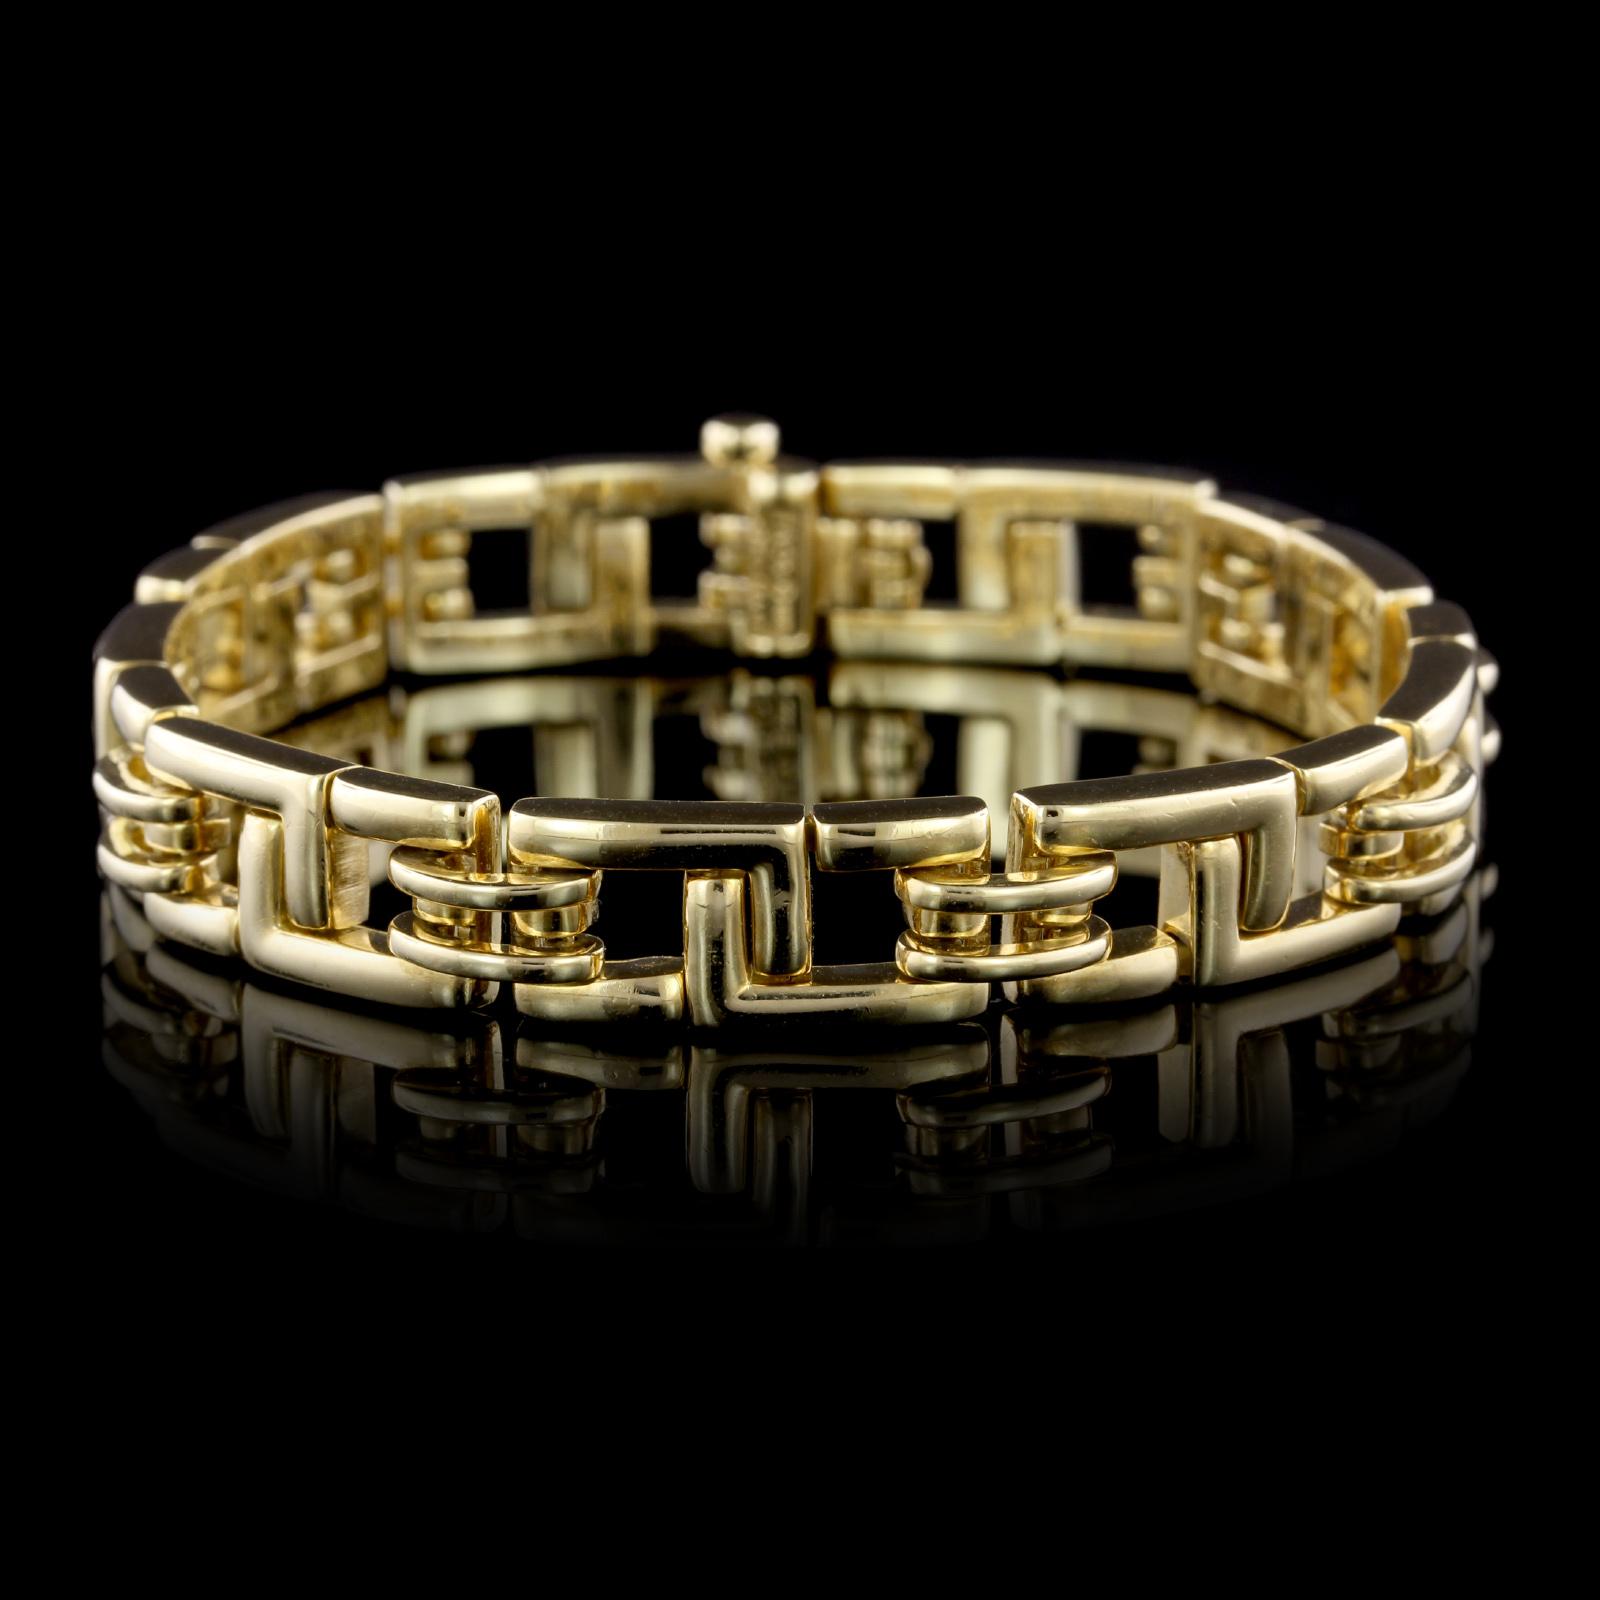 Tiffany & Co. 18K Yellow Gold Bracelet. The bracelet is designed with flexible fancy
links, circa 2001, length 7 1/2